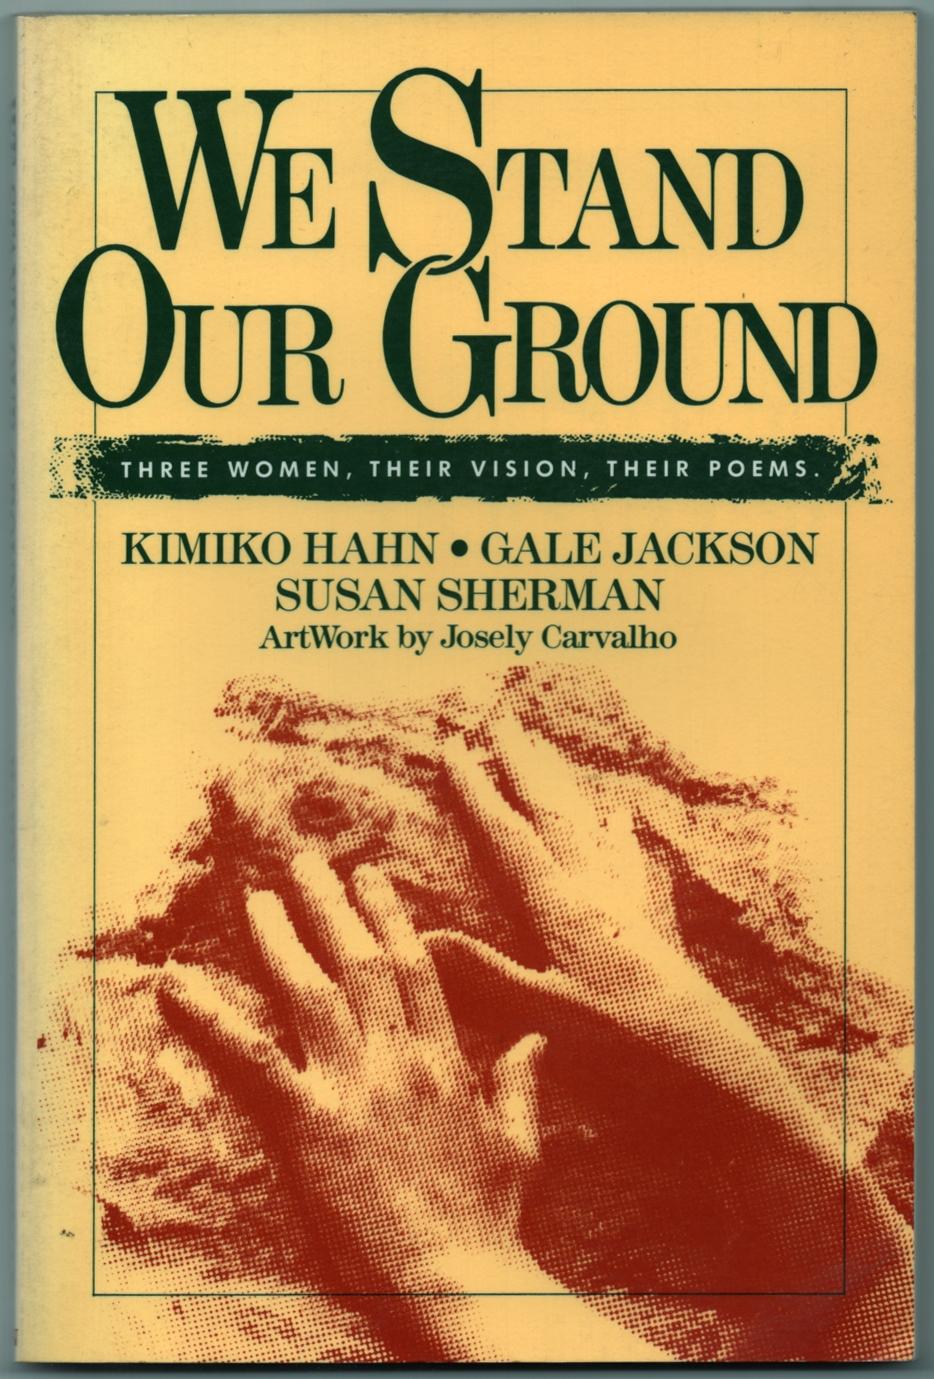 We Stand Our Ground: Three women, Their Vision, Their Poems - HAHN, Kimiko, Gale Jackson, Susan Sherman